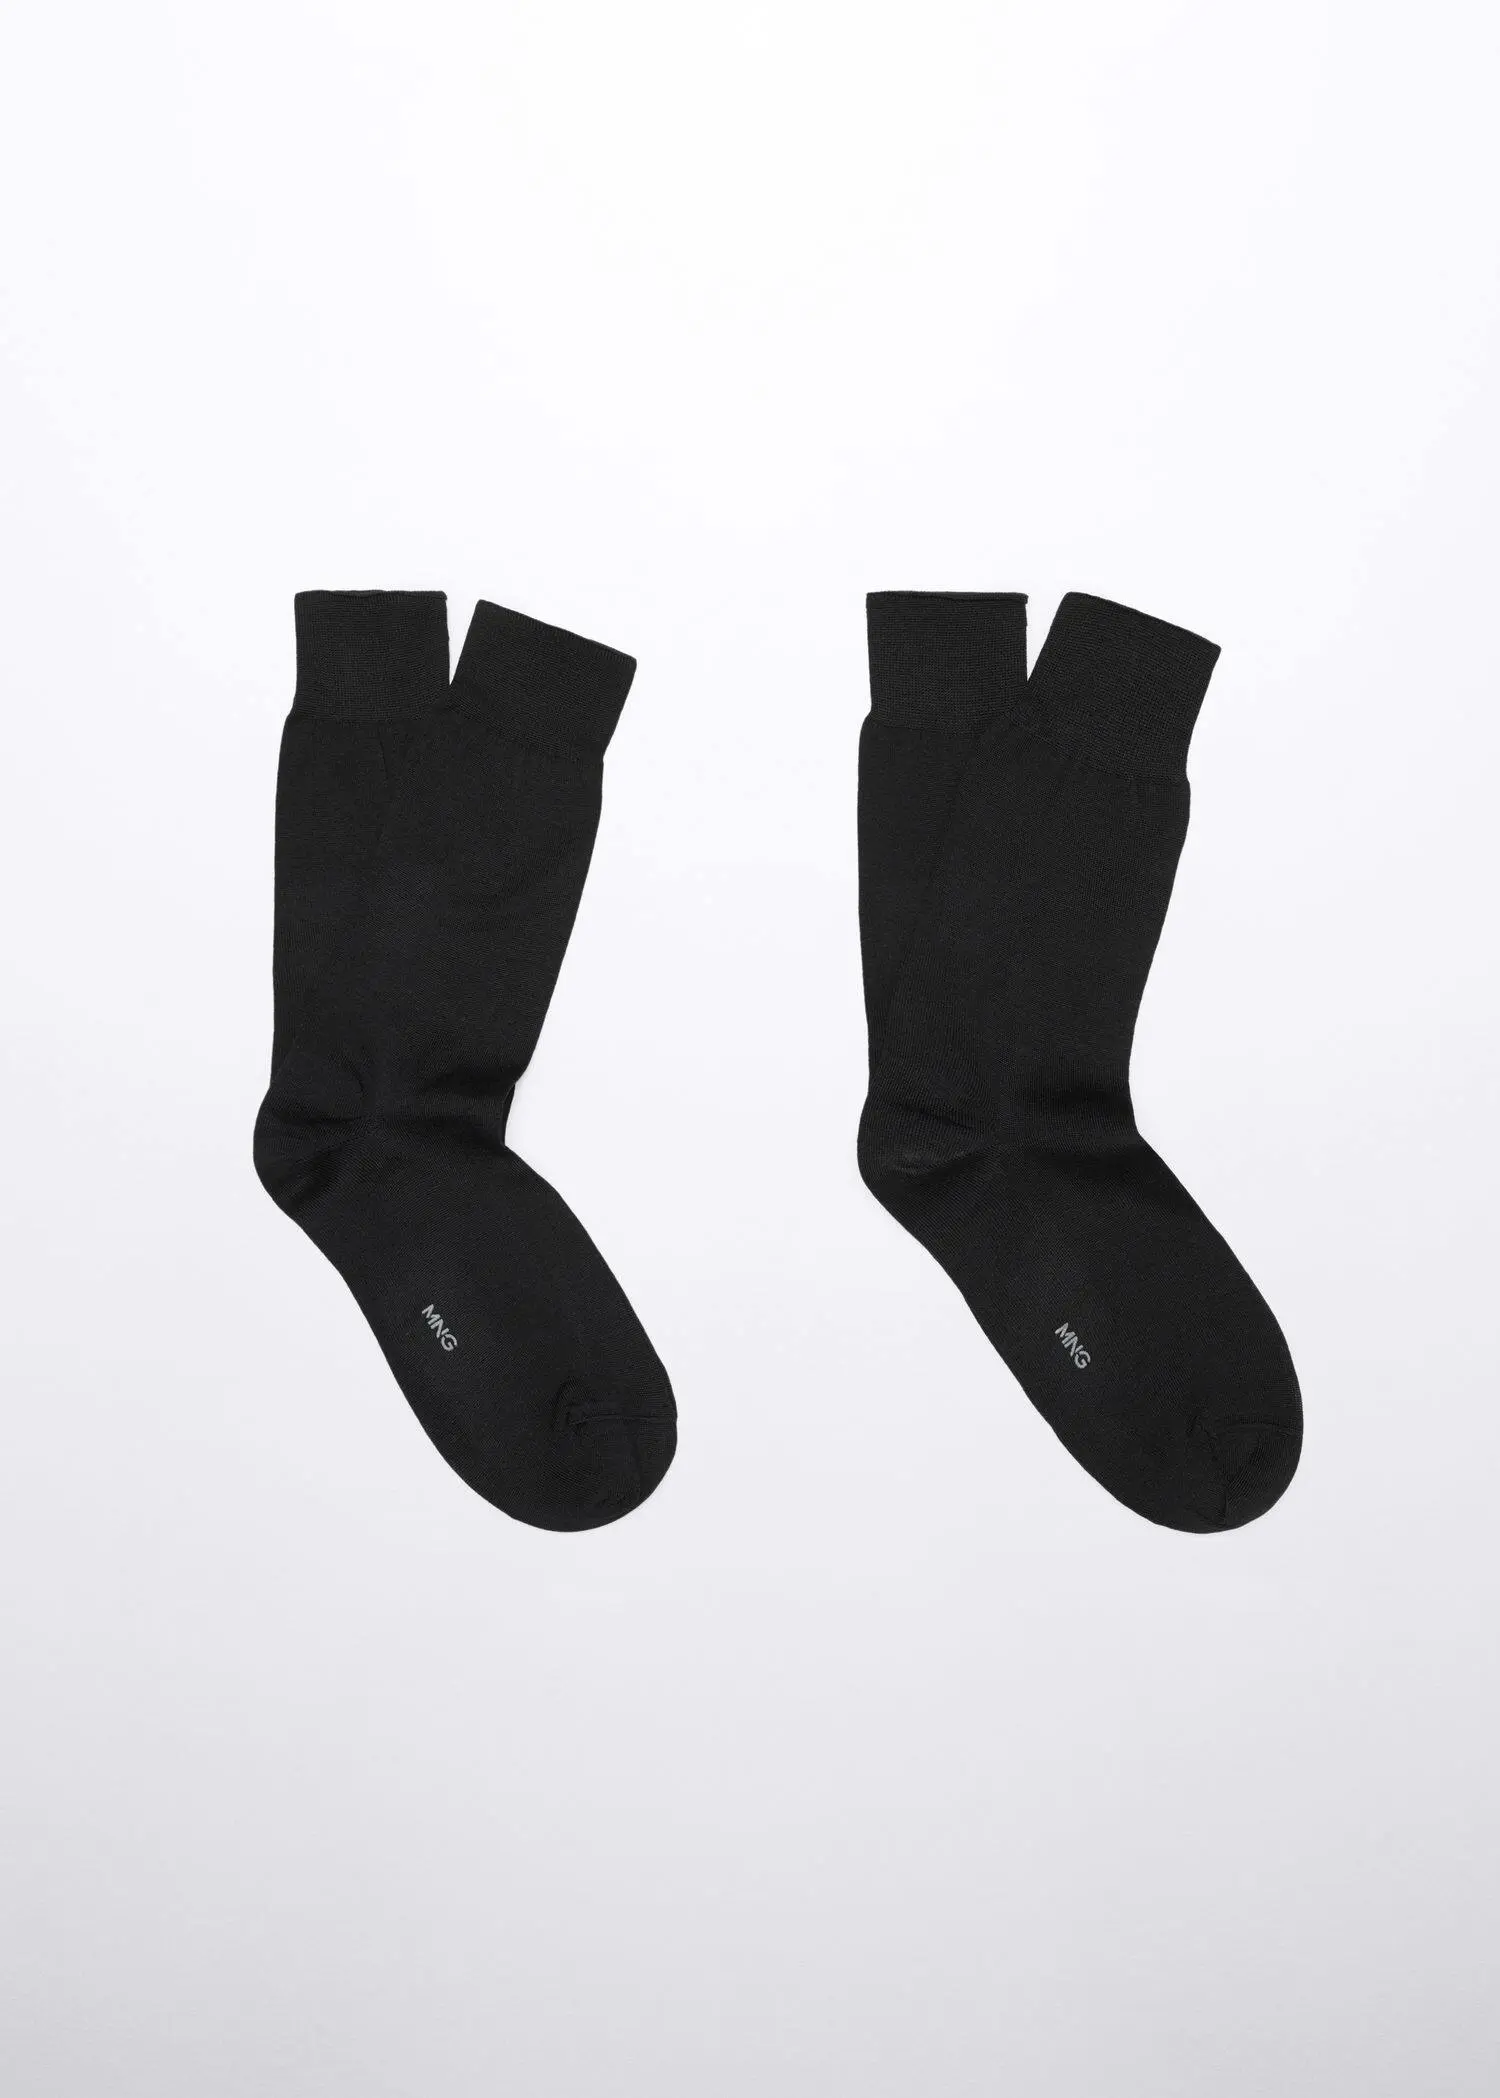 Mango 100% plain cotton socks. a pair of black socks on a white background. 